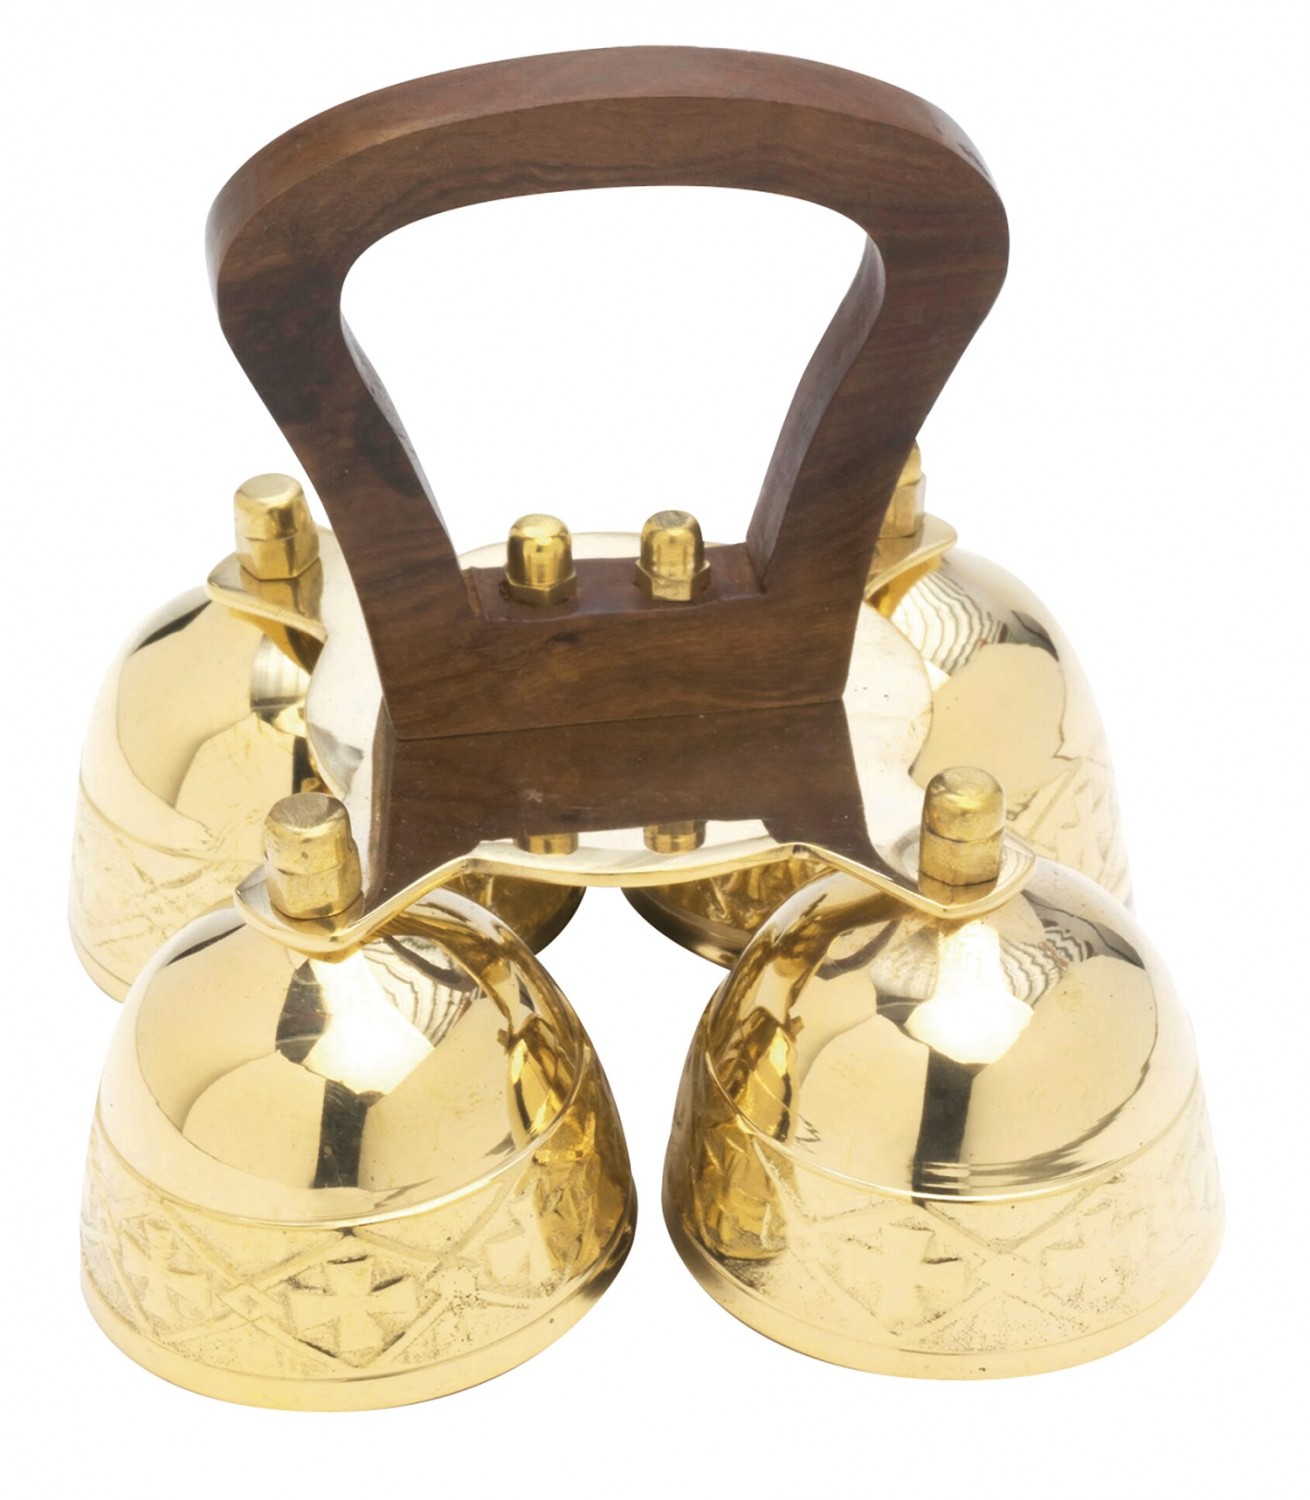 Altar bell - altar bells and Laboratorio Gruppo Liturgico